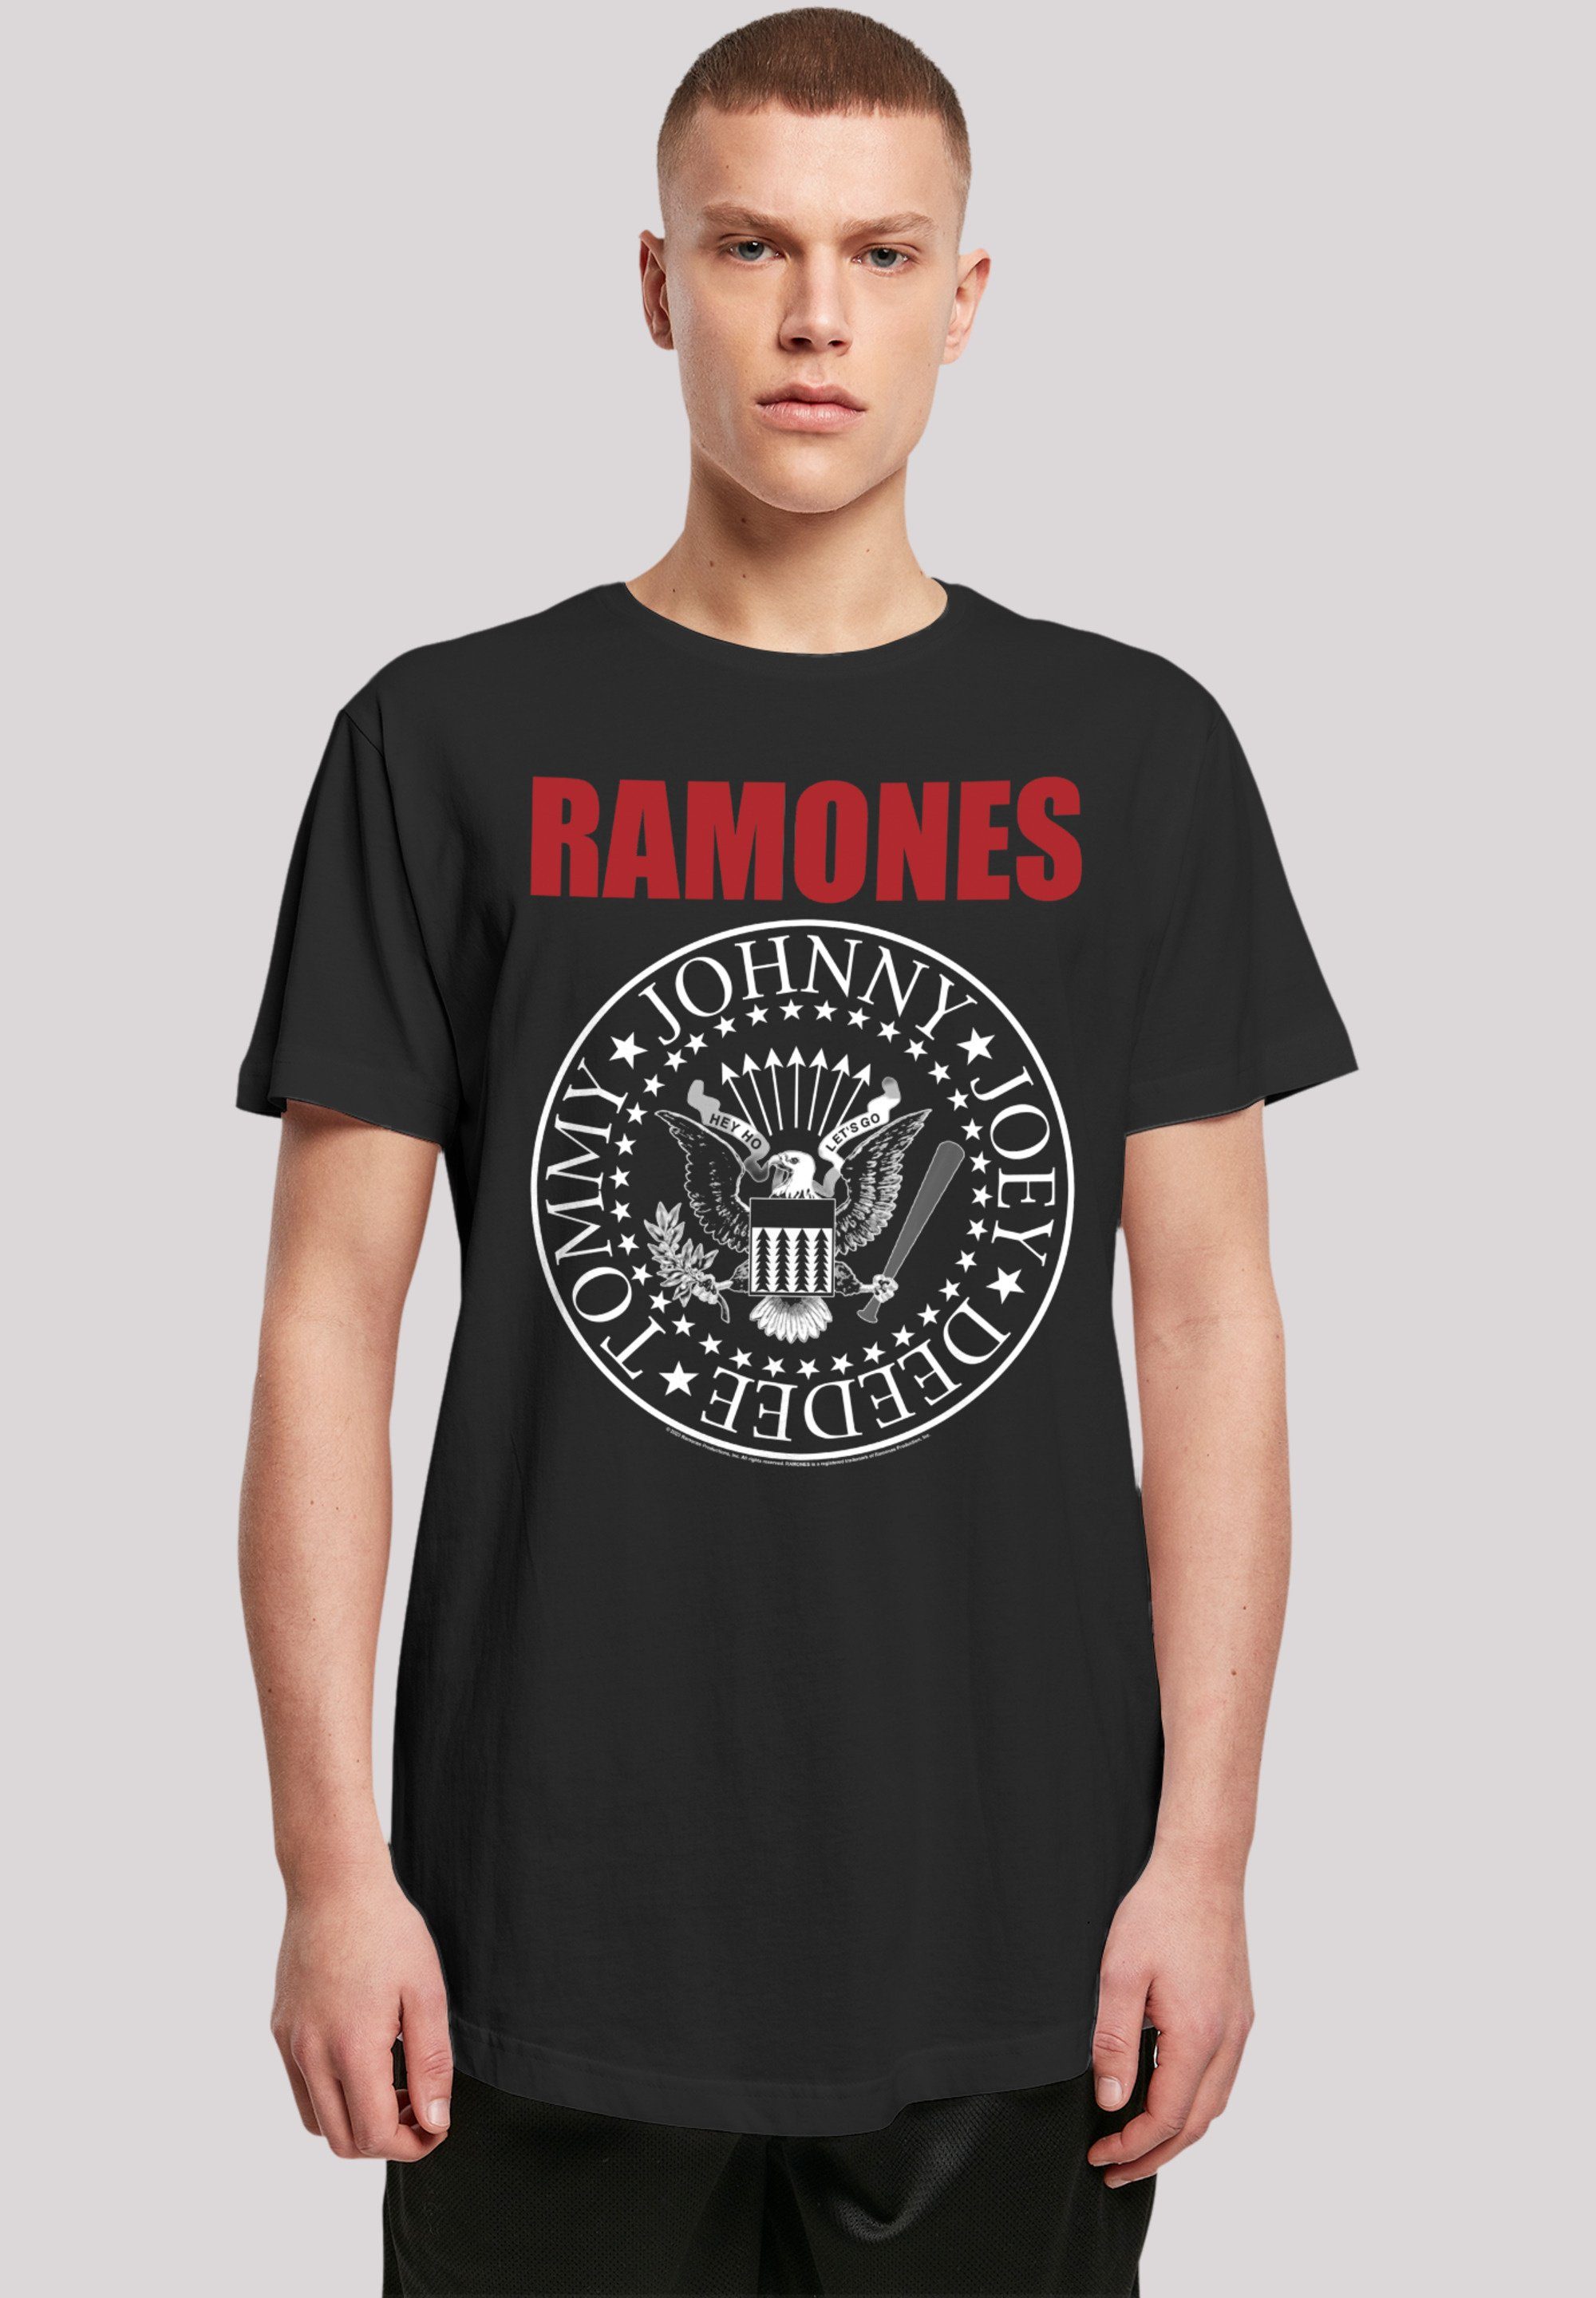 F4NT4STIC T-Shirt Seal Premium Text Band Band, Ramones Red Rock Rock-Musik Musik Qualität